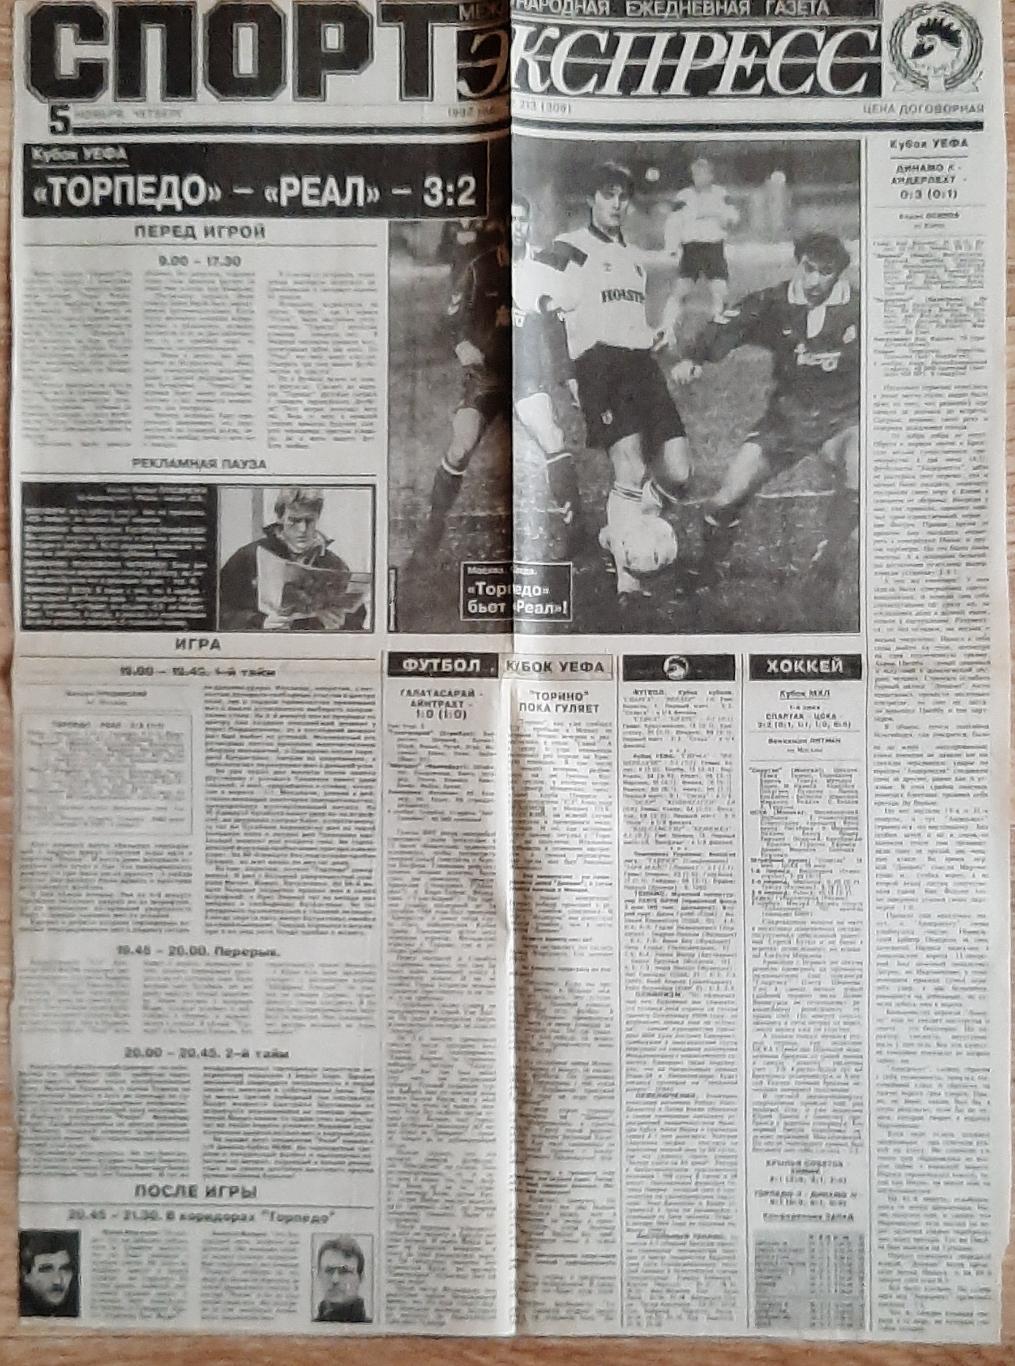 Вирізка з газети Спорт експрес #213 (5 листопада 1992)